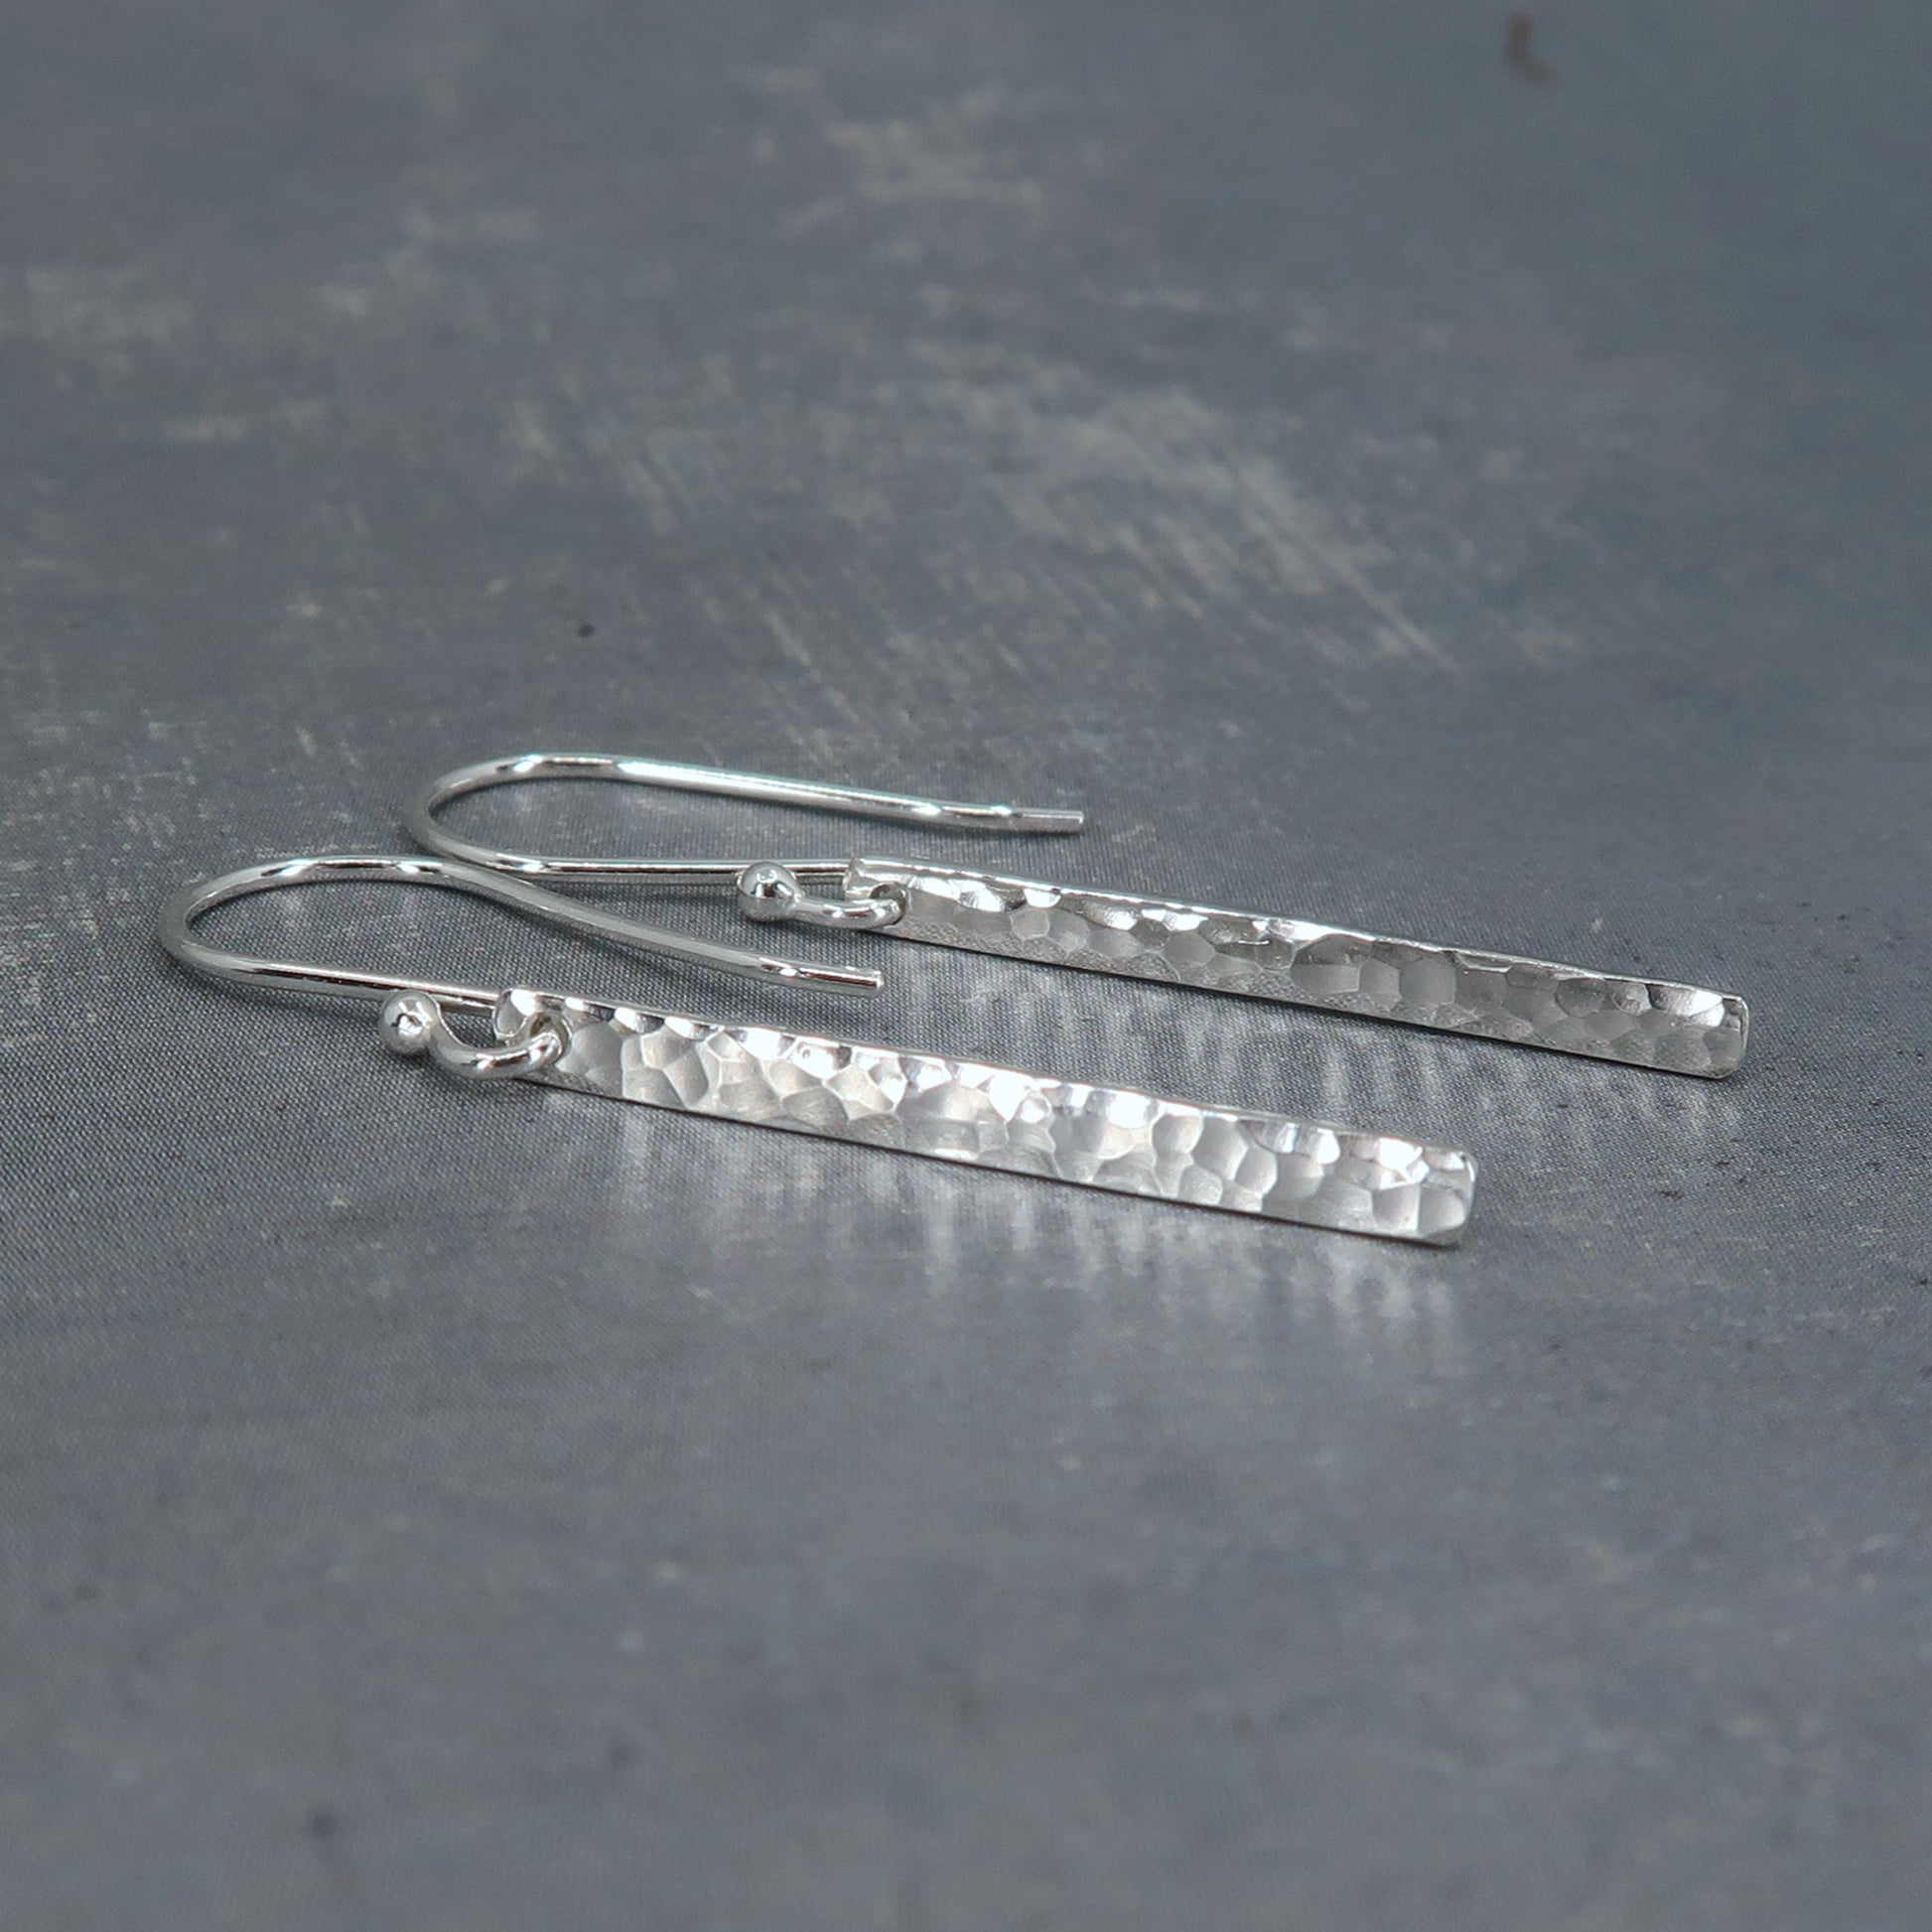 Hammered silver bar earrings